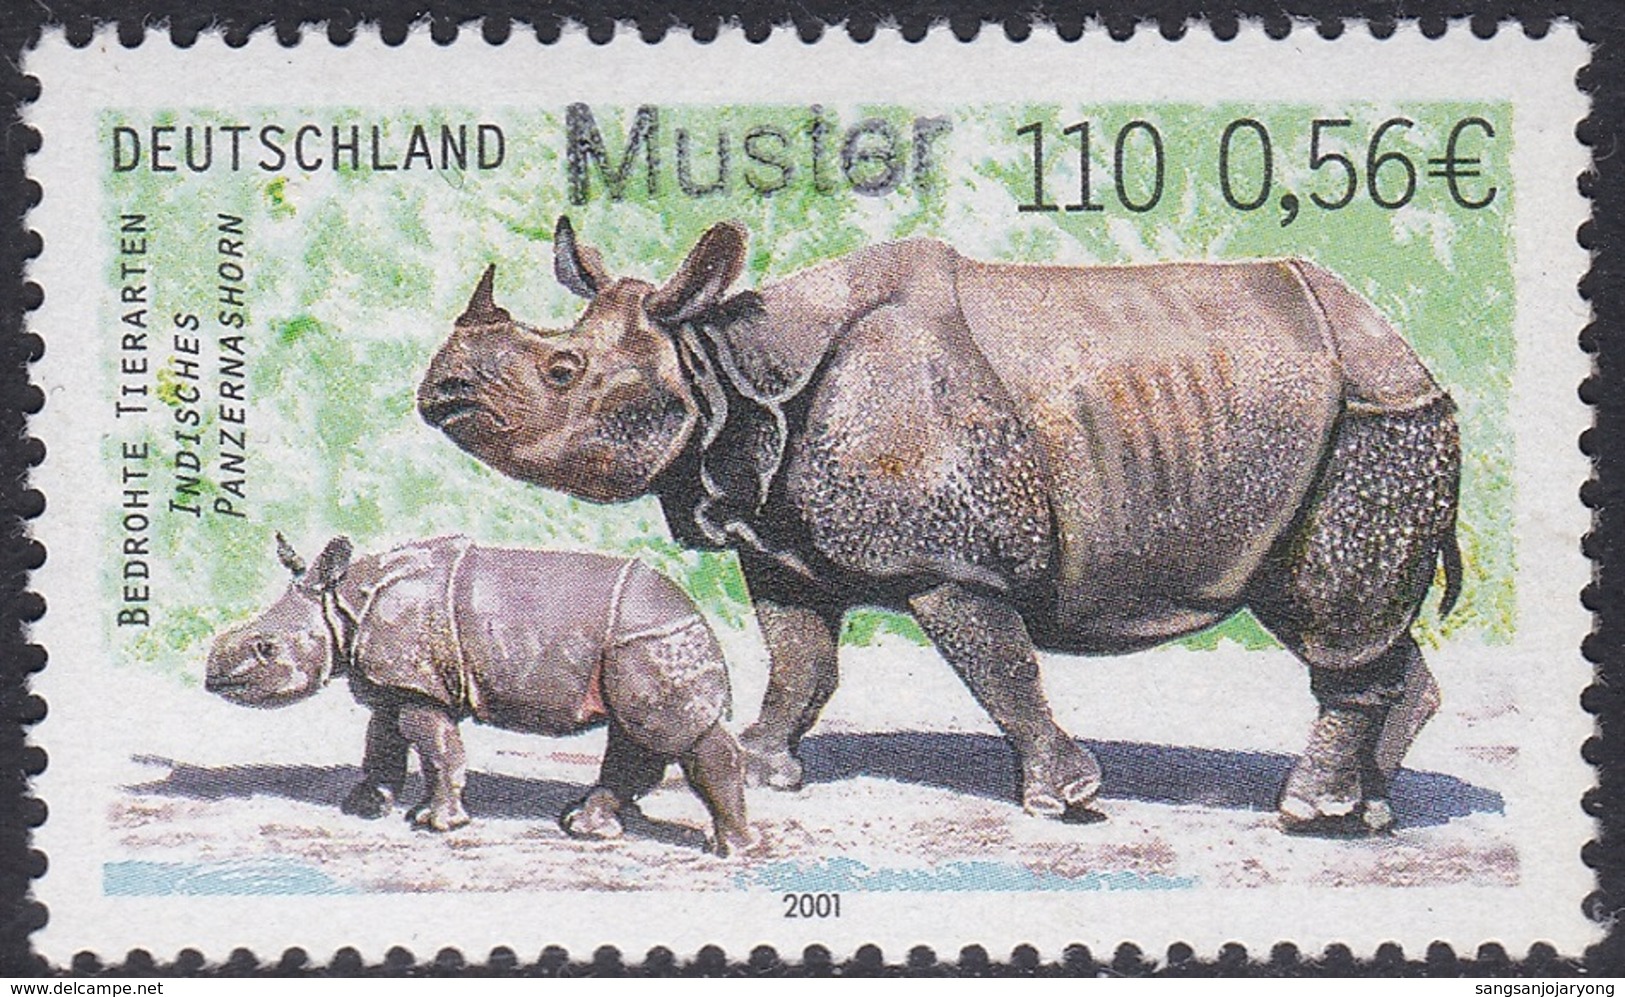 Specimen, Germany Sc2125 Endangered Animal, Indian Rhinoceros - Rhinocéros